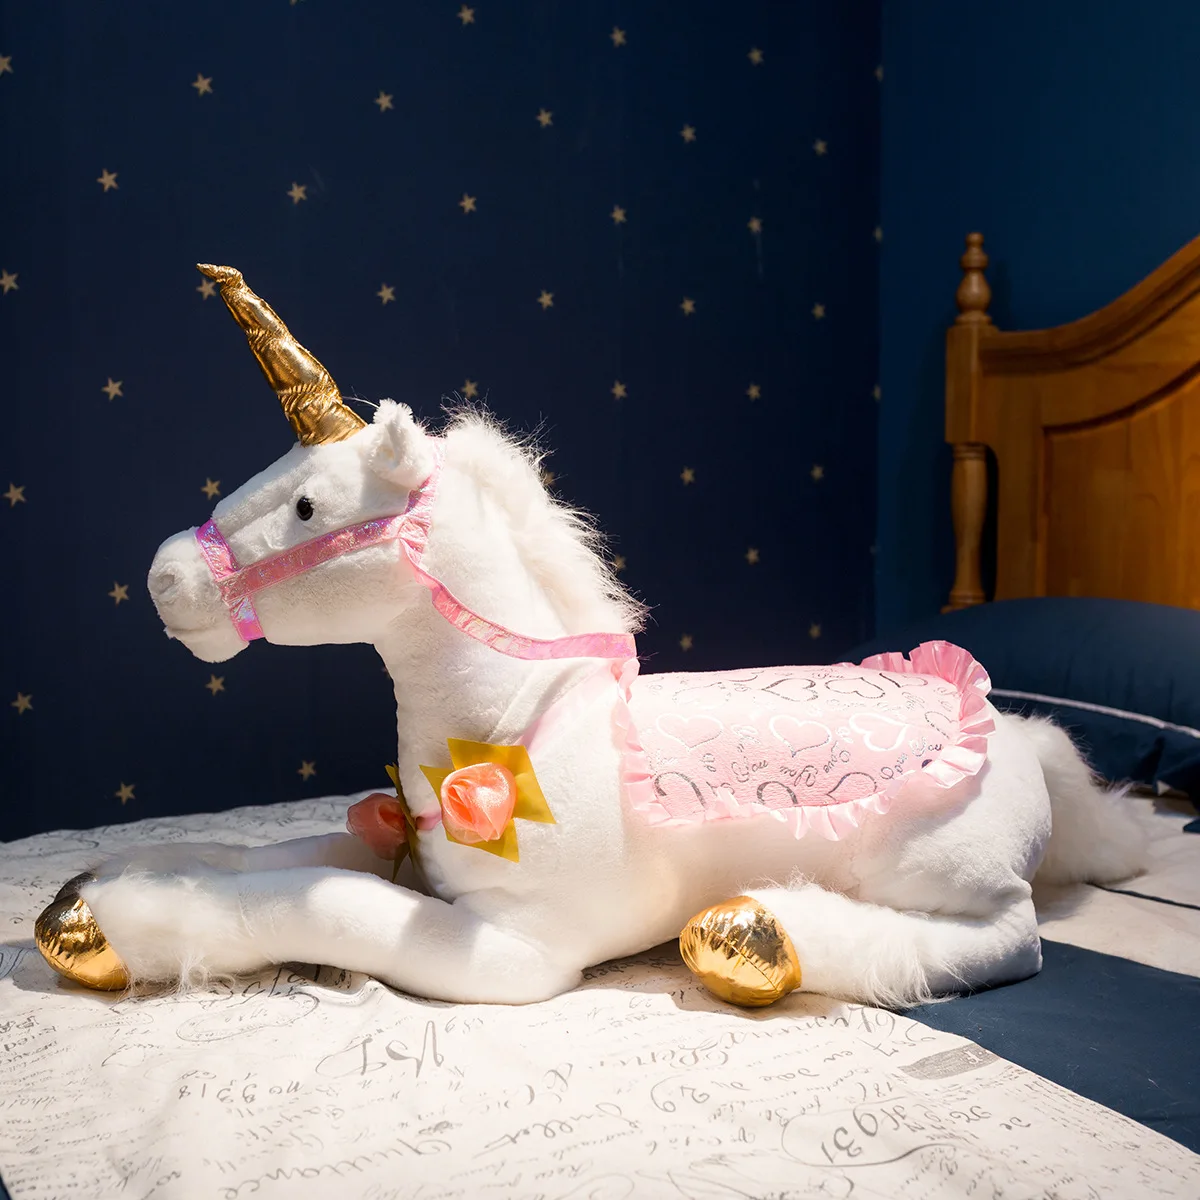 100cm Jumbo White Unicorn Plush Toy Giant Unicorn Stuffed Animal Horse Toy Soft Unicornio Peluche Doll Children Gift Photo Props